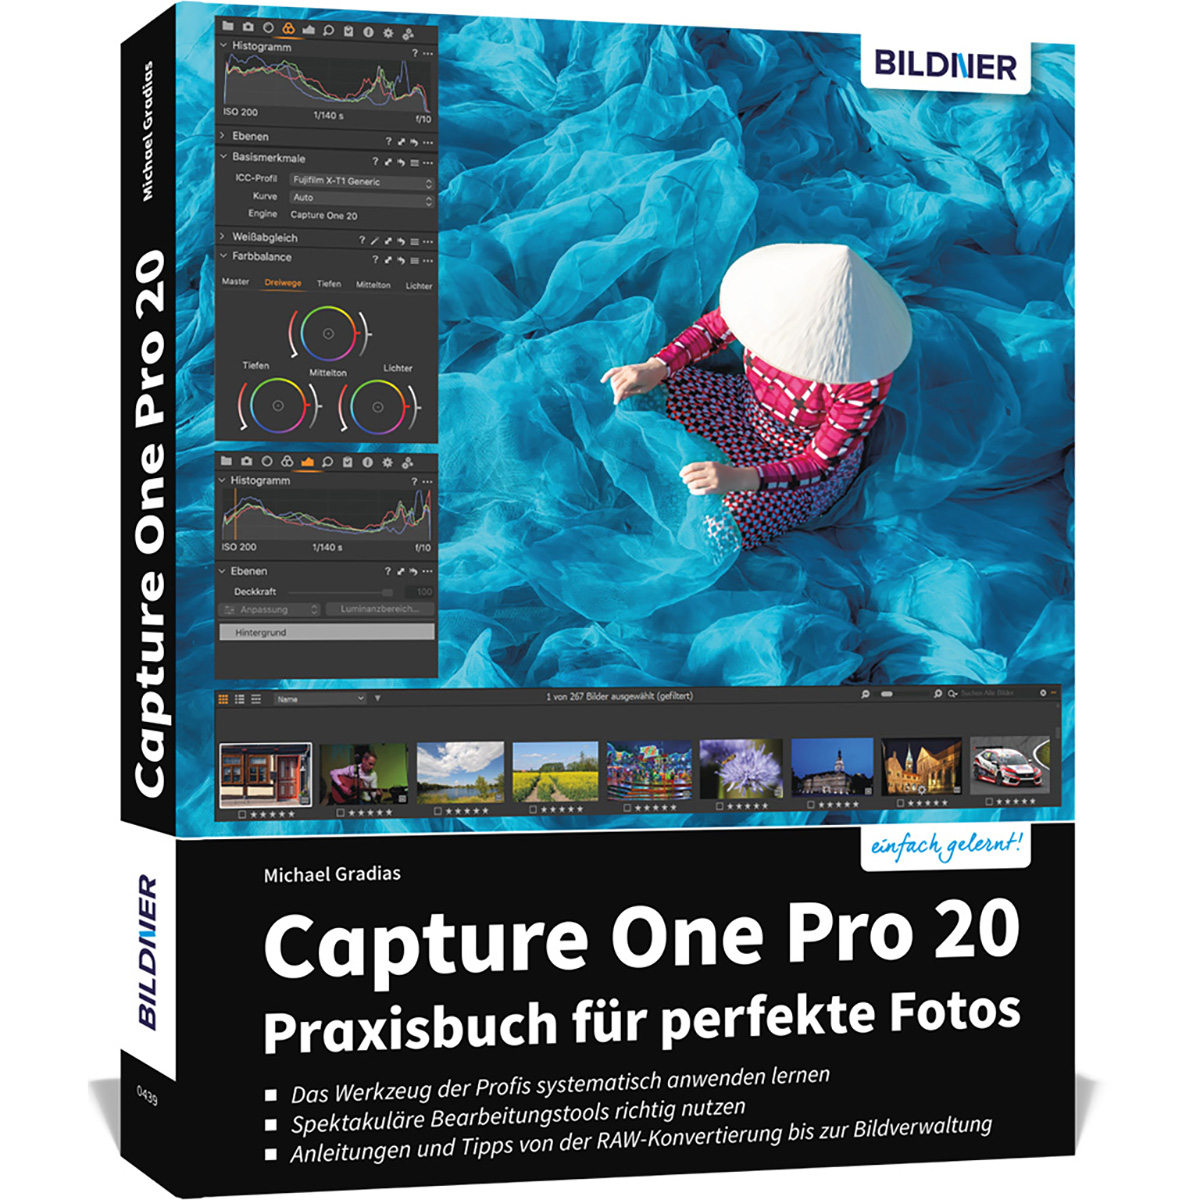 Capture One Pro 20 Das - Praxishandbuch